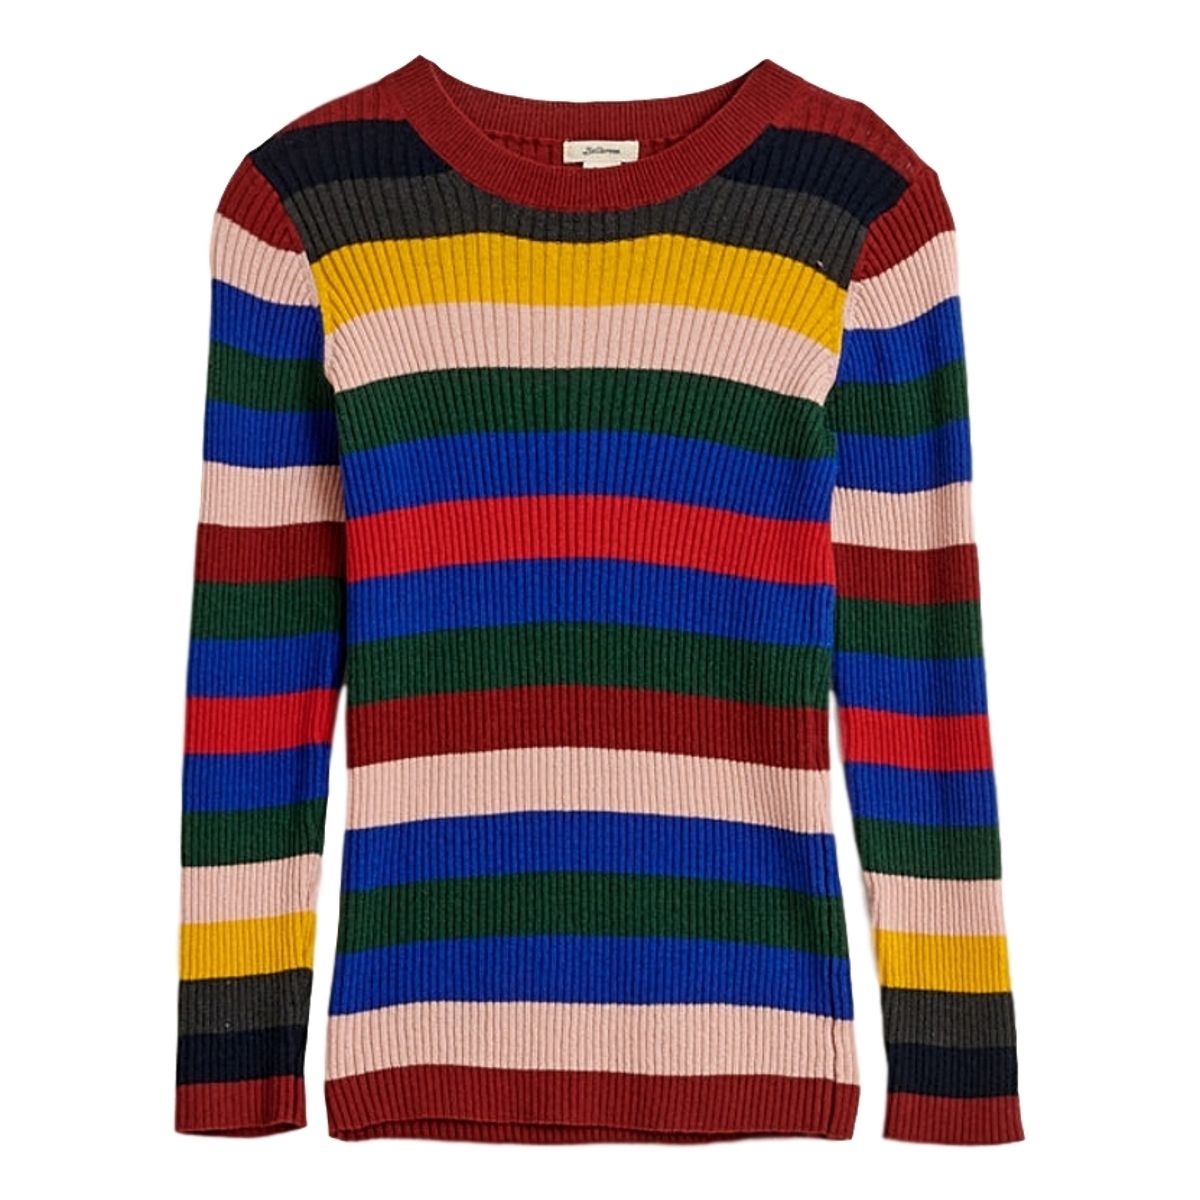 Bellerose Sweater Grise multicolor BK 192911 K1008S 